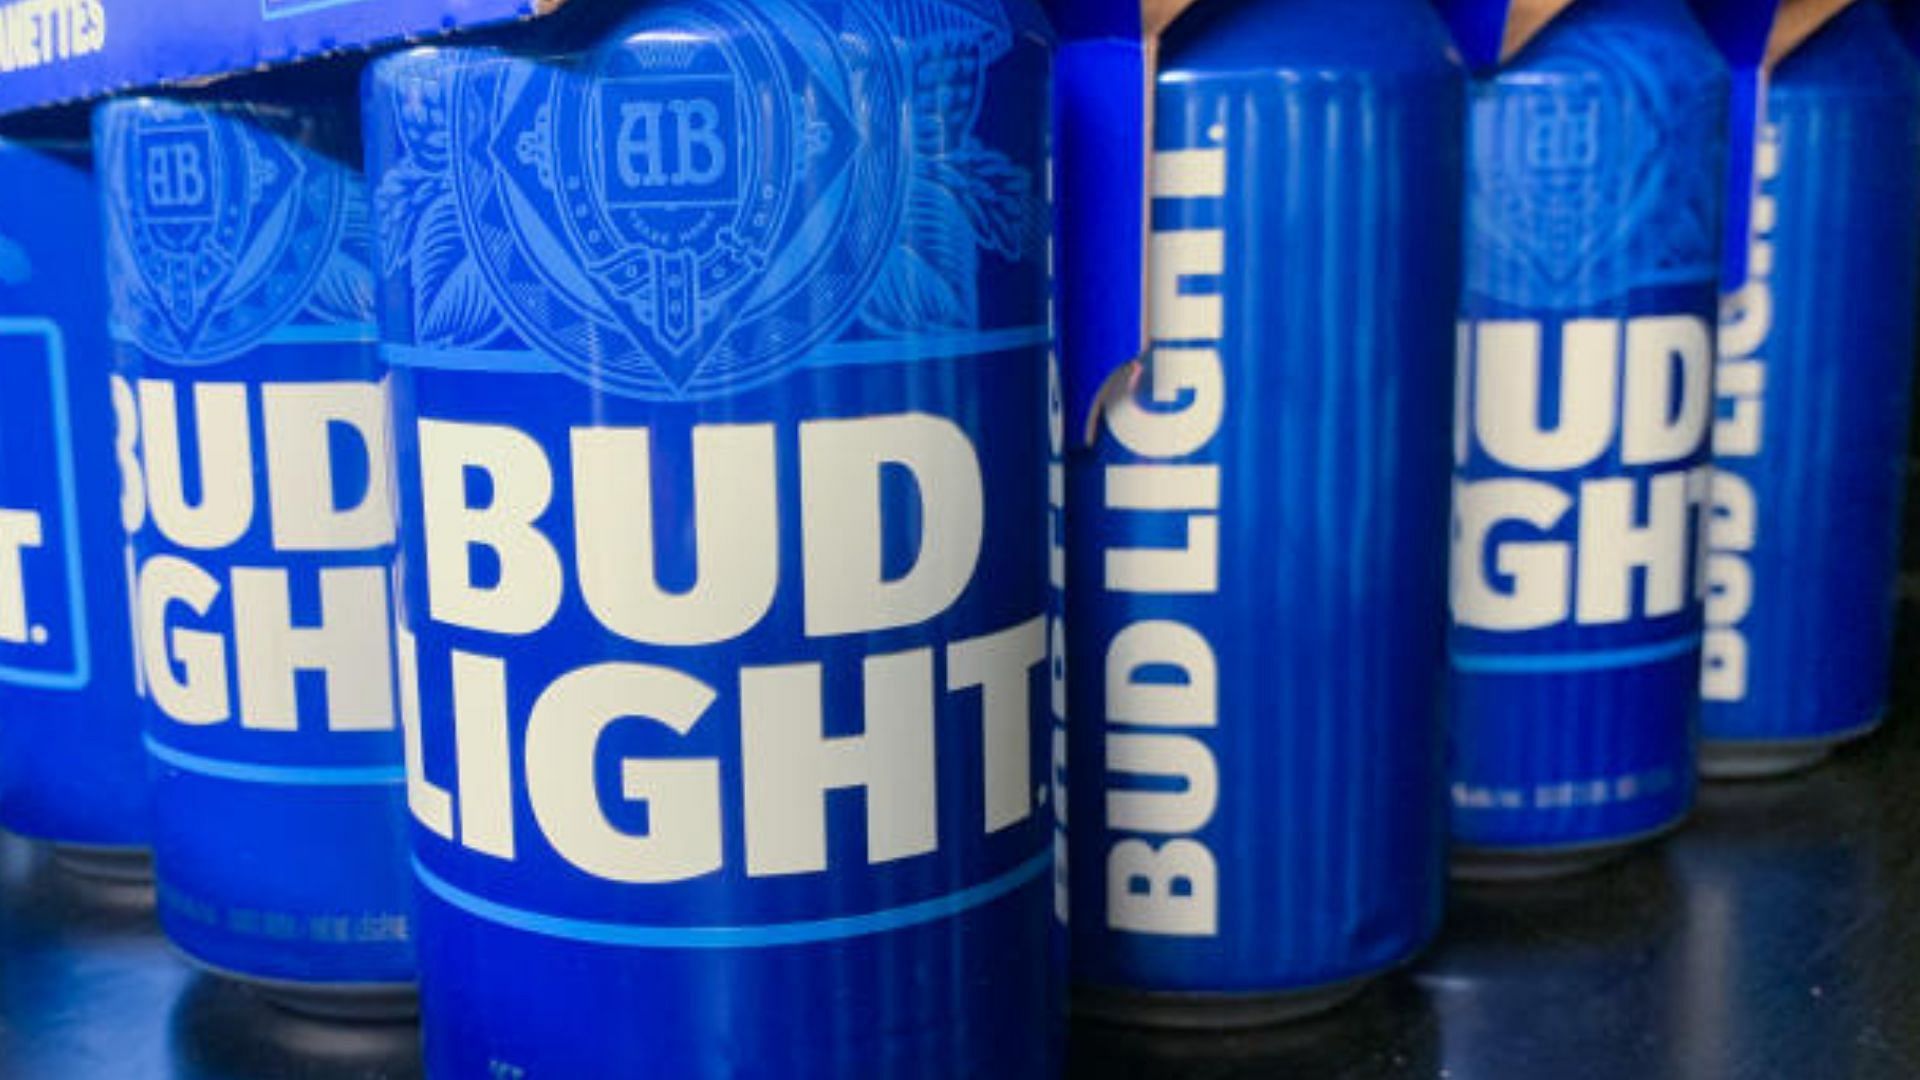 Bud Light Beer rebate form 2023 (Image via Getty Images)